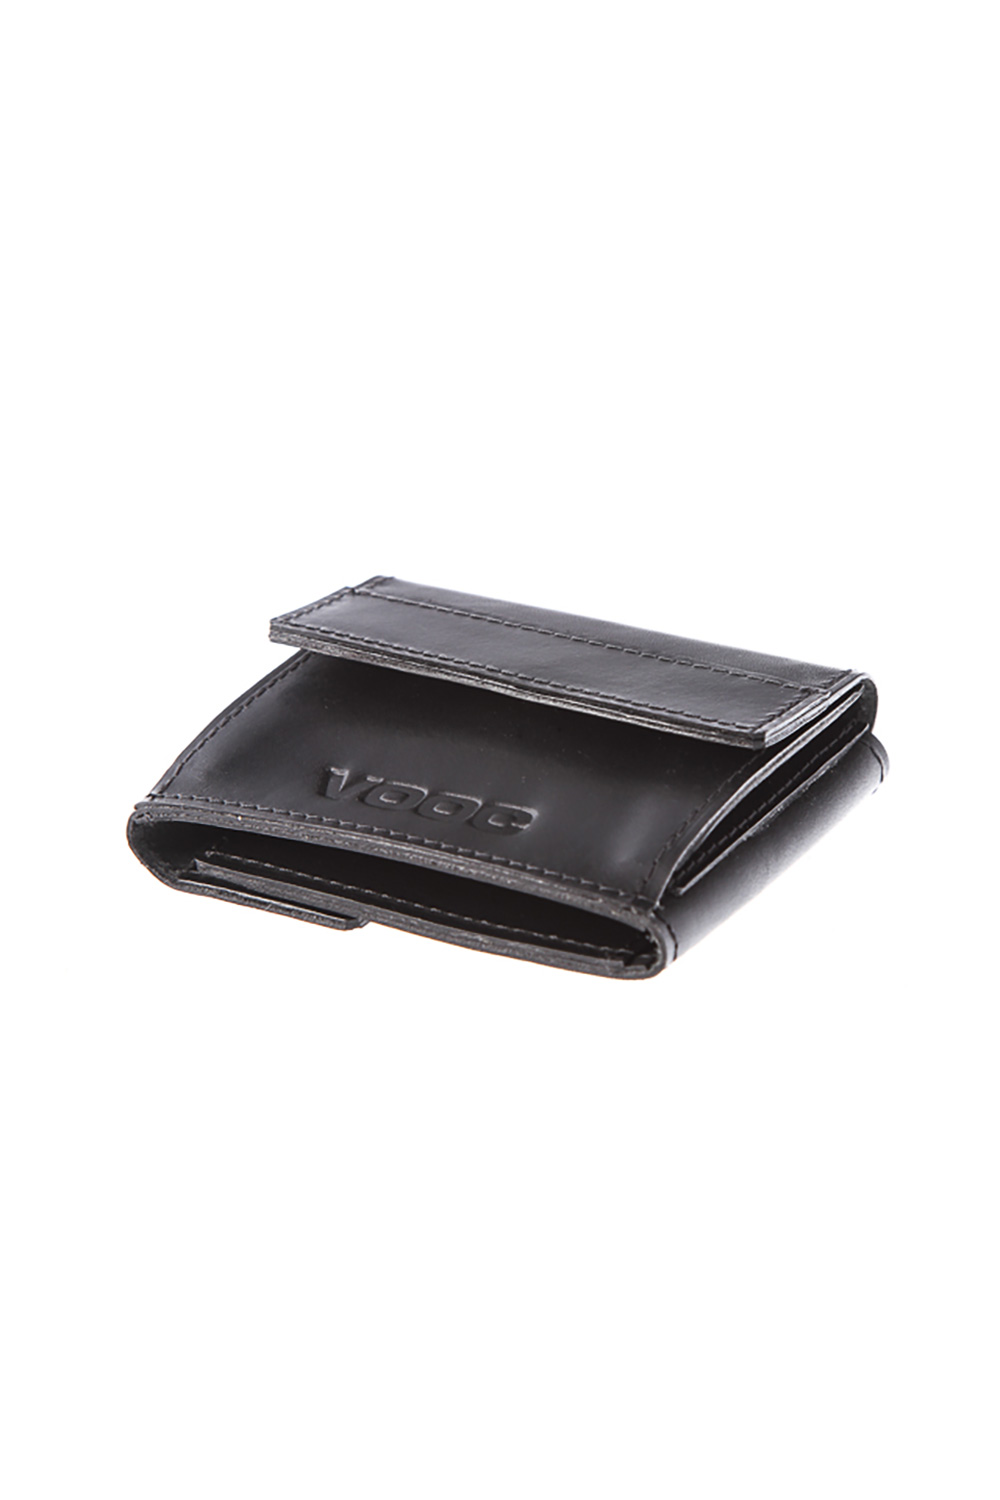 Wallet model 152148 Verosoft